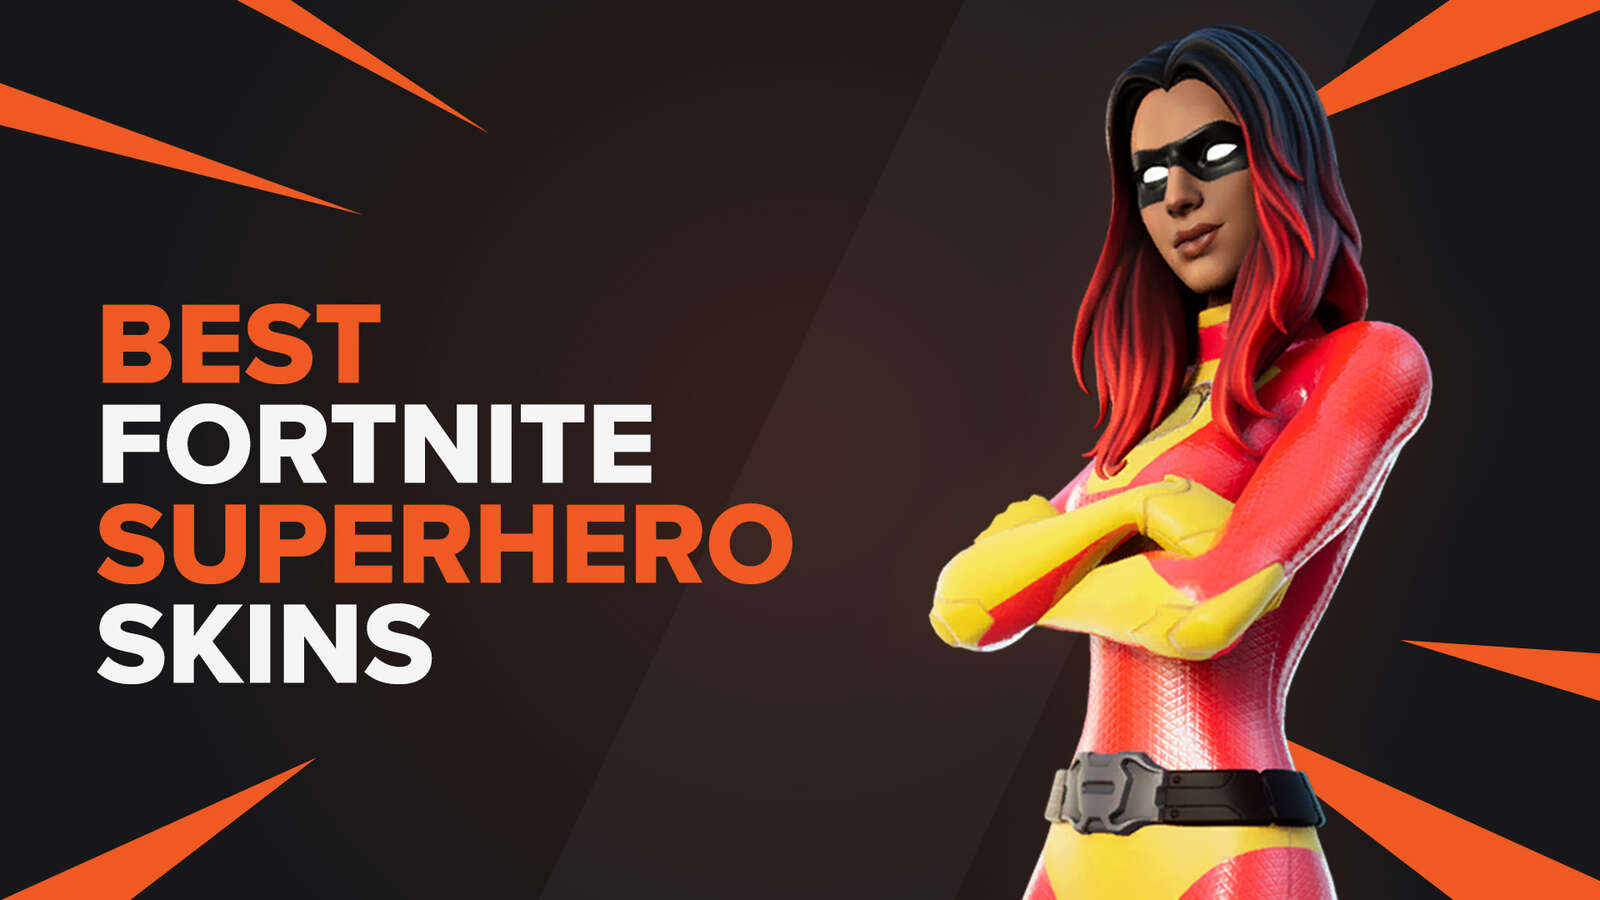 Best Fortnite Superhero Skins